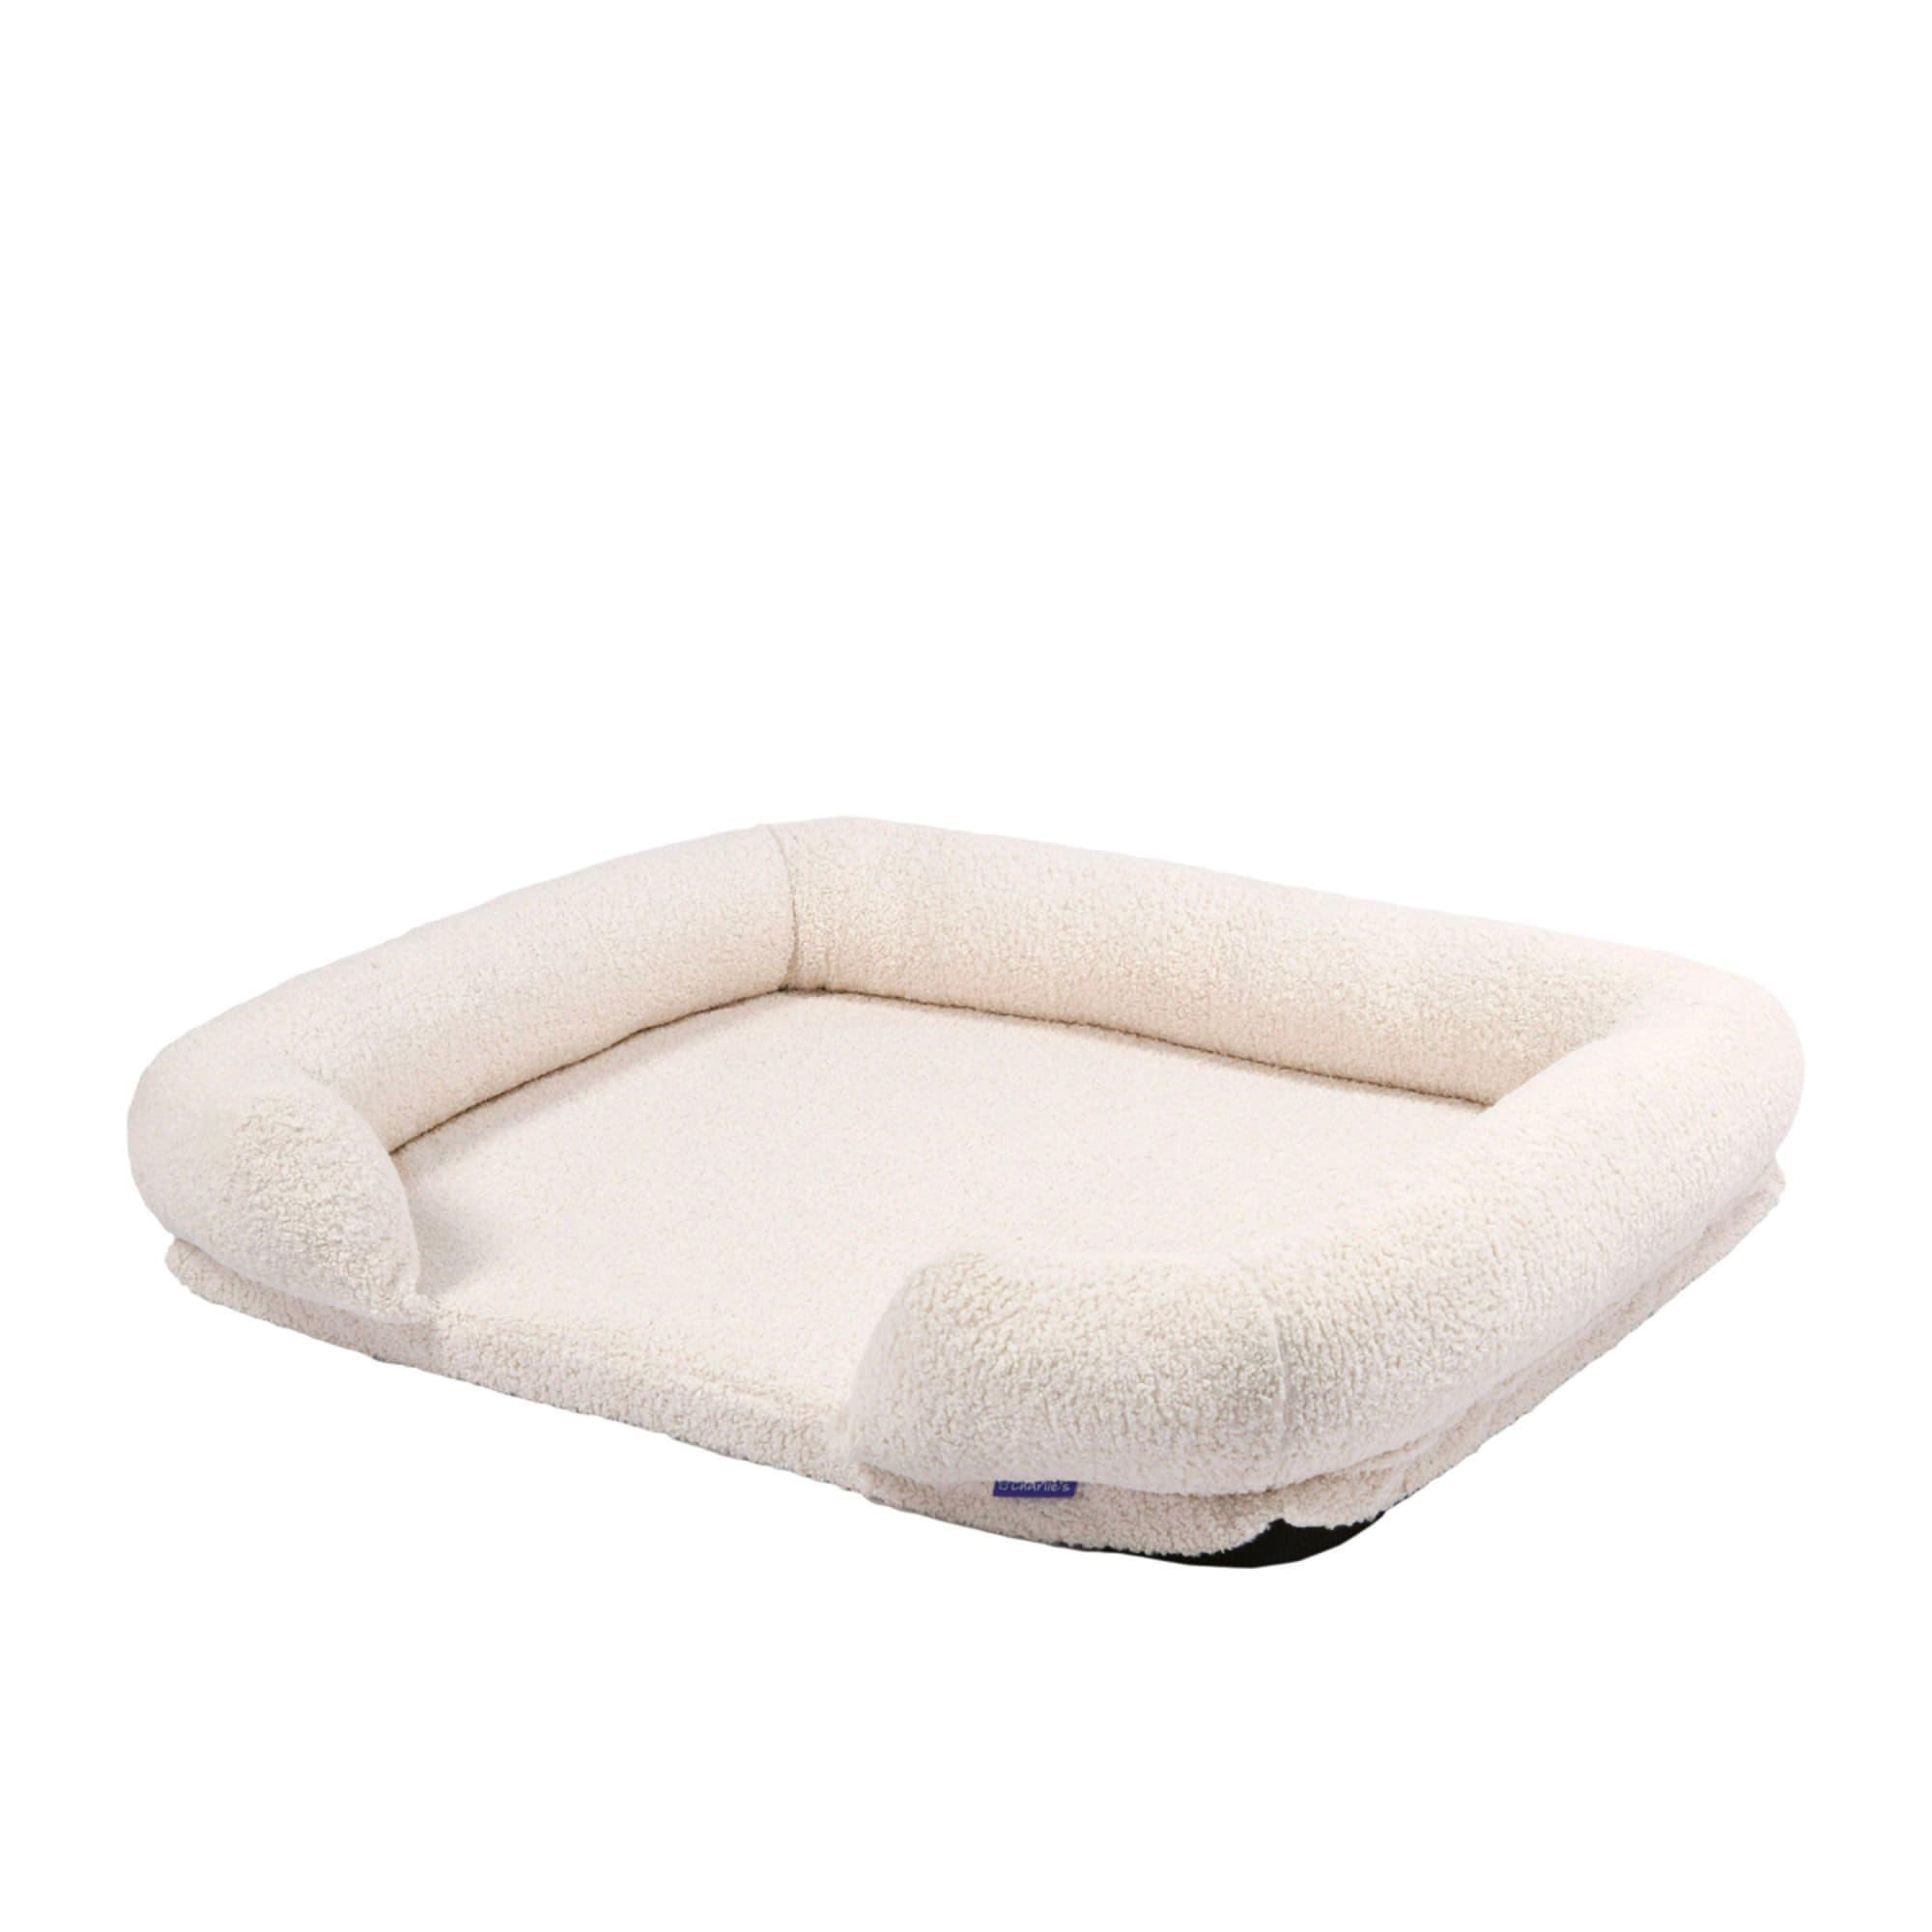 Charlie's Teddy Fleece Orthopedic Memory Foam Sofa Dog Bed Large Cream Image 3